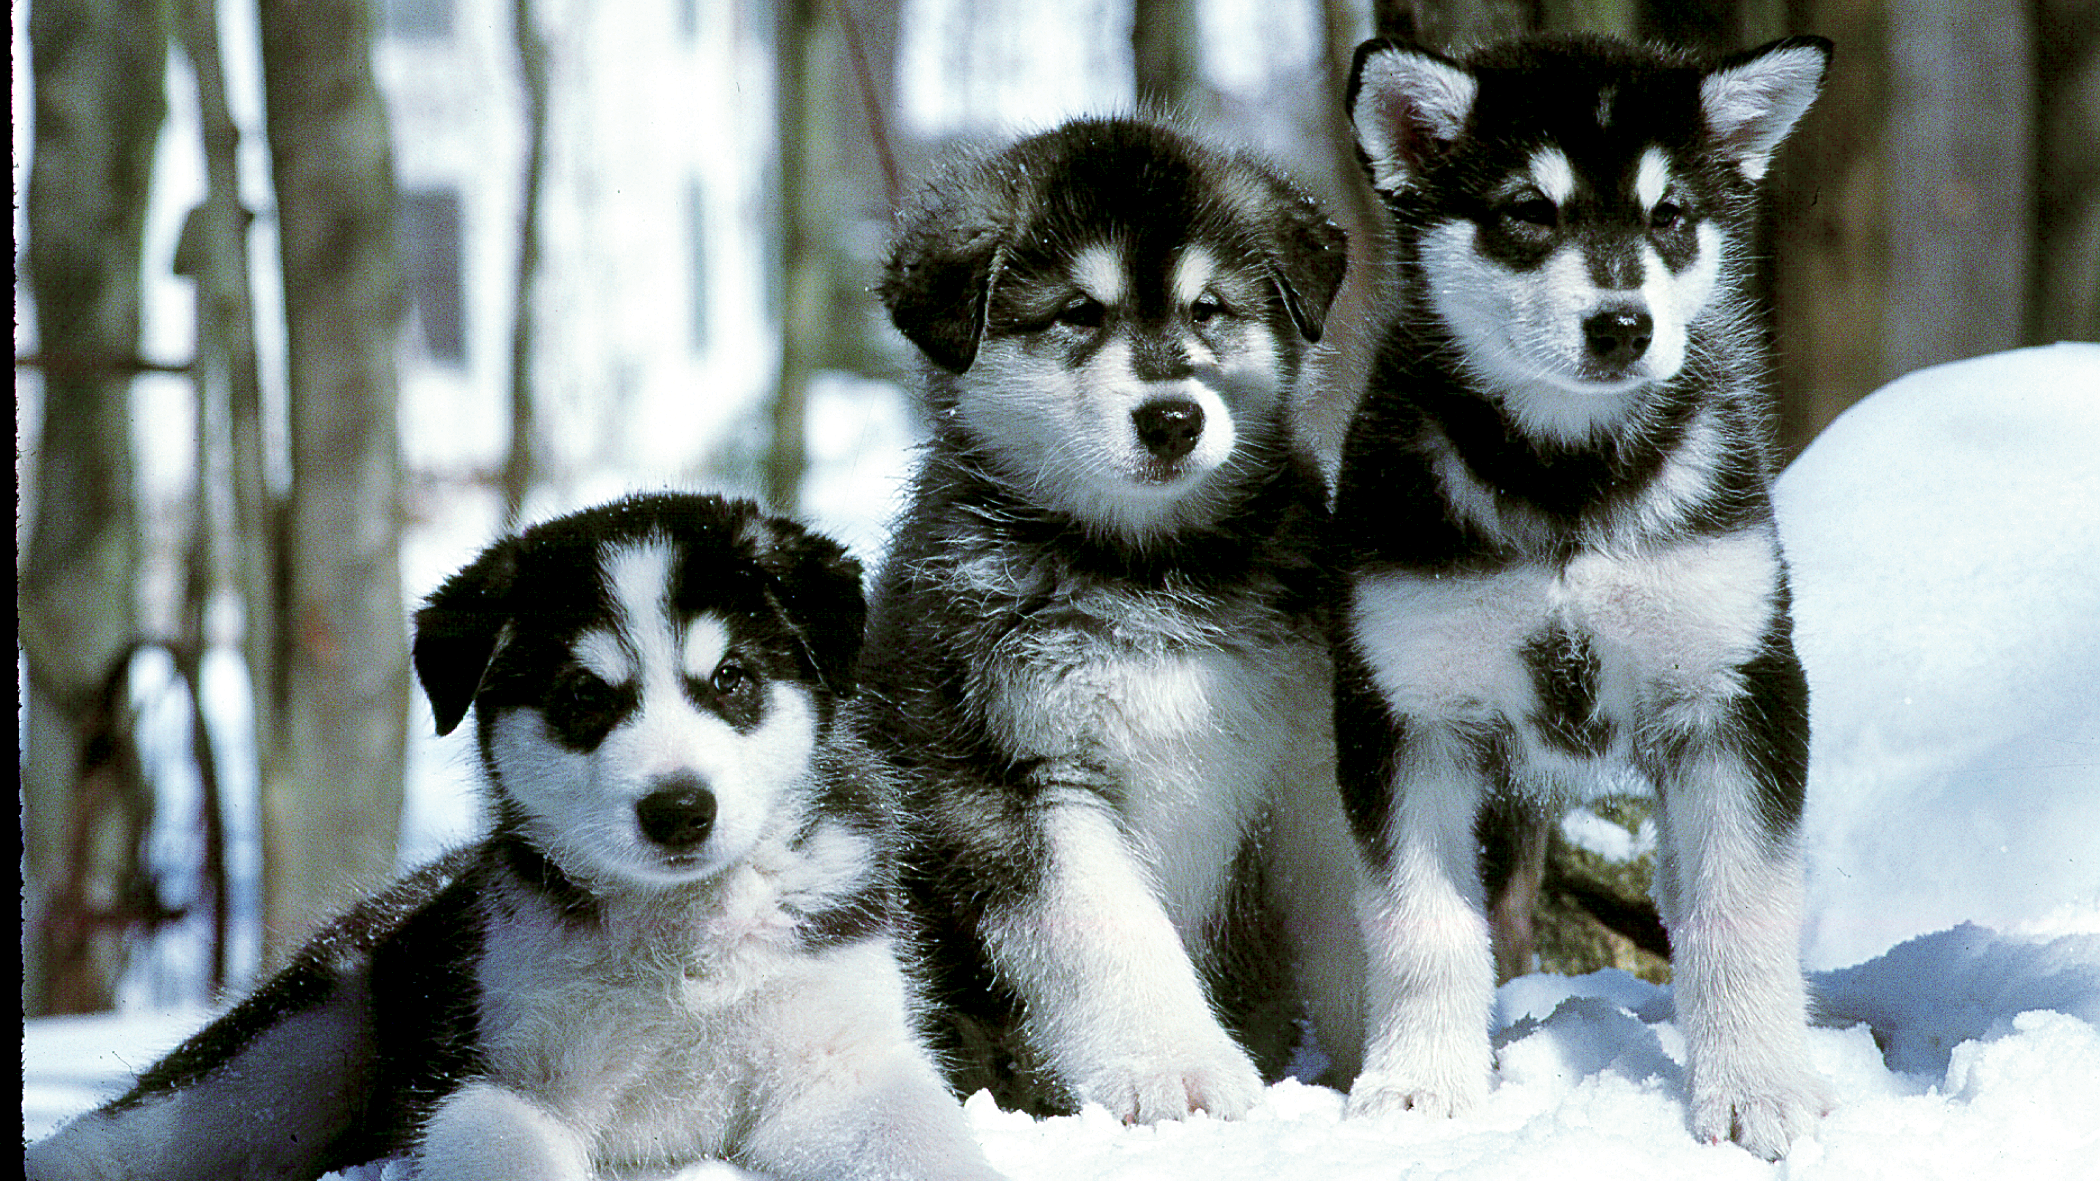 Three Alaskan Malamute puppies sat together in the snow